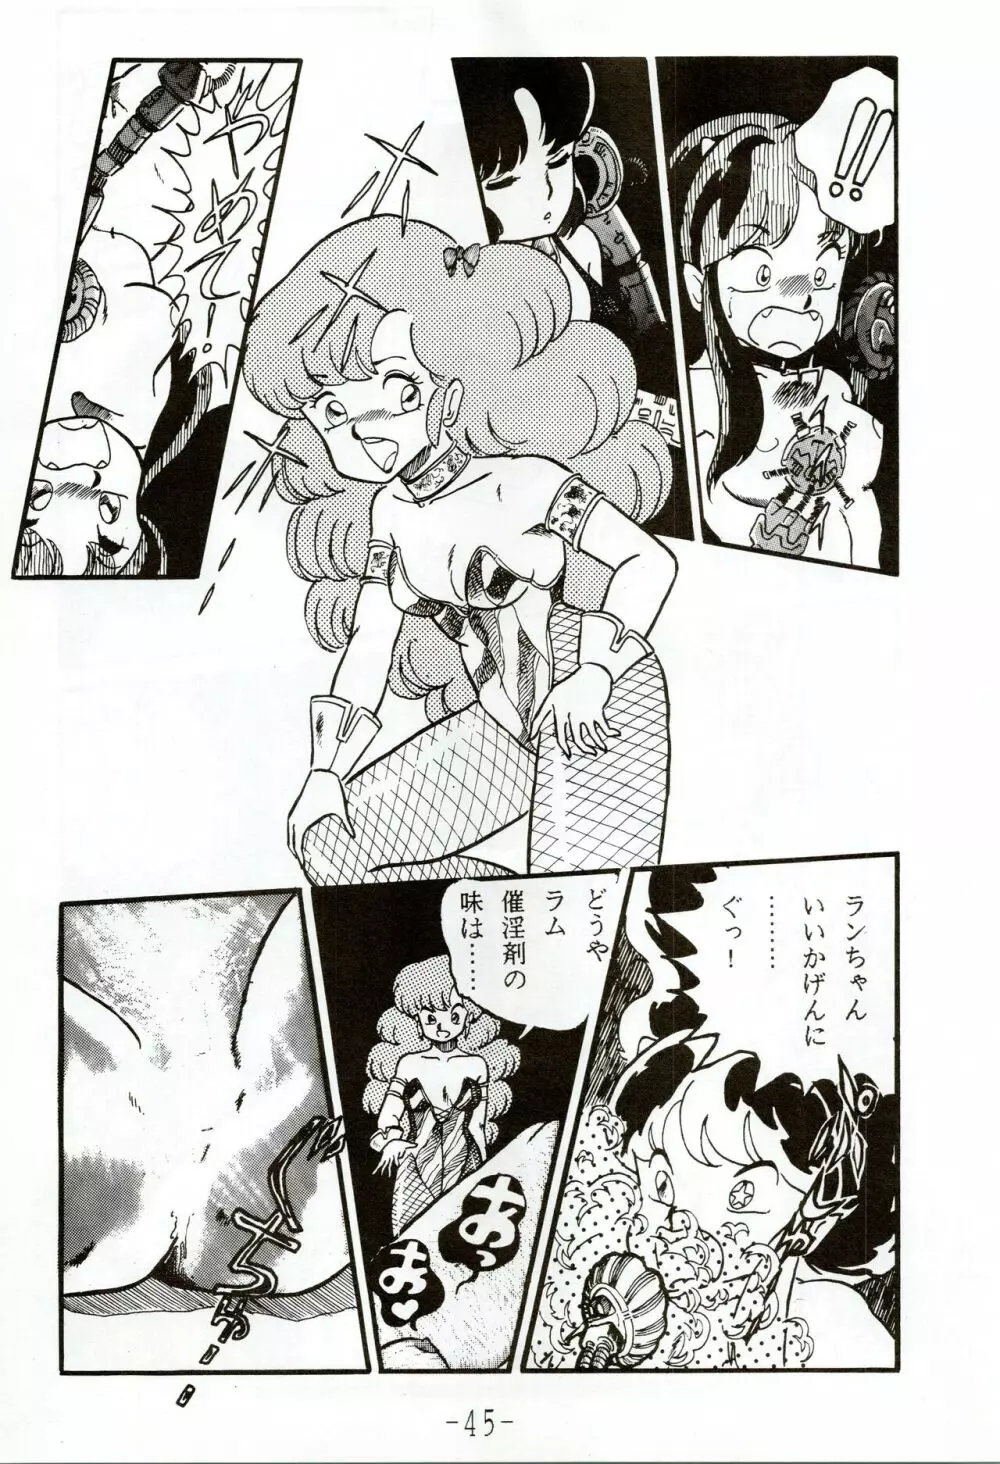 甲冑伝説 - page45